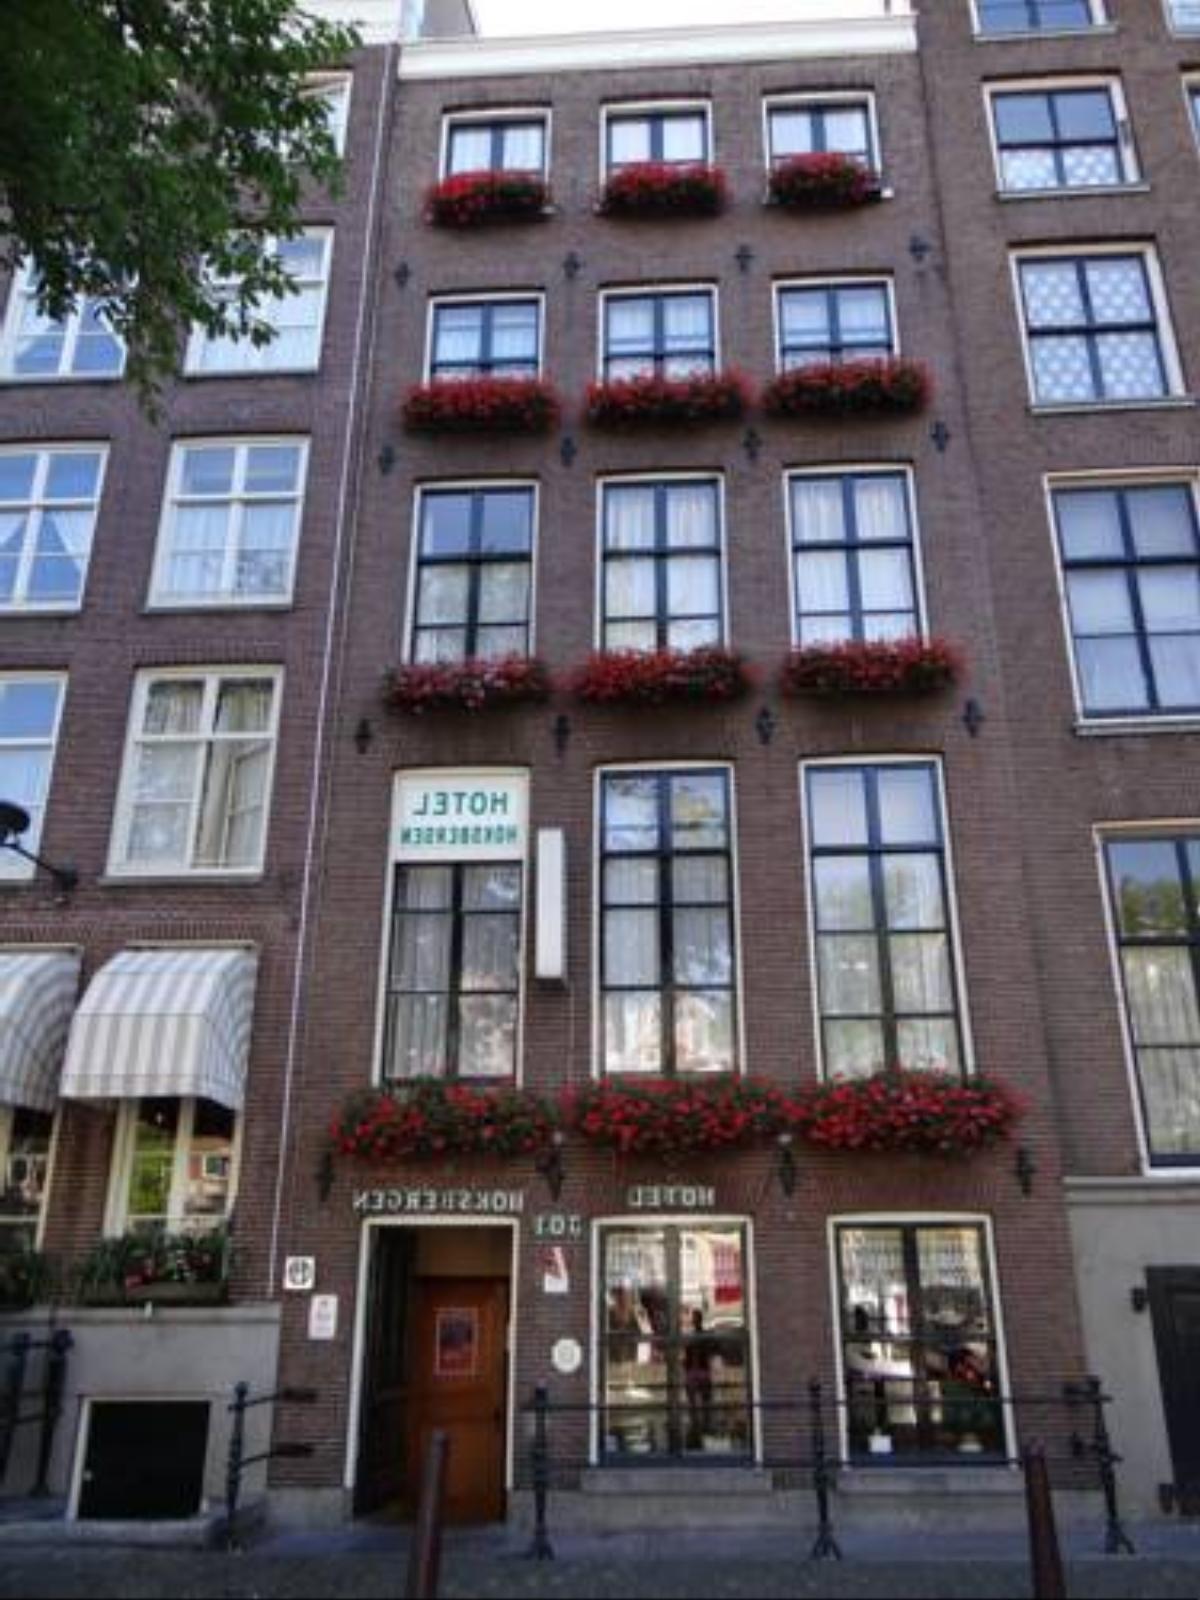 Hoksbergen Hotel Hotel Amsterdam Netherlands